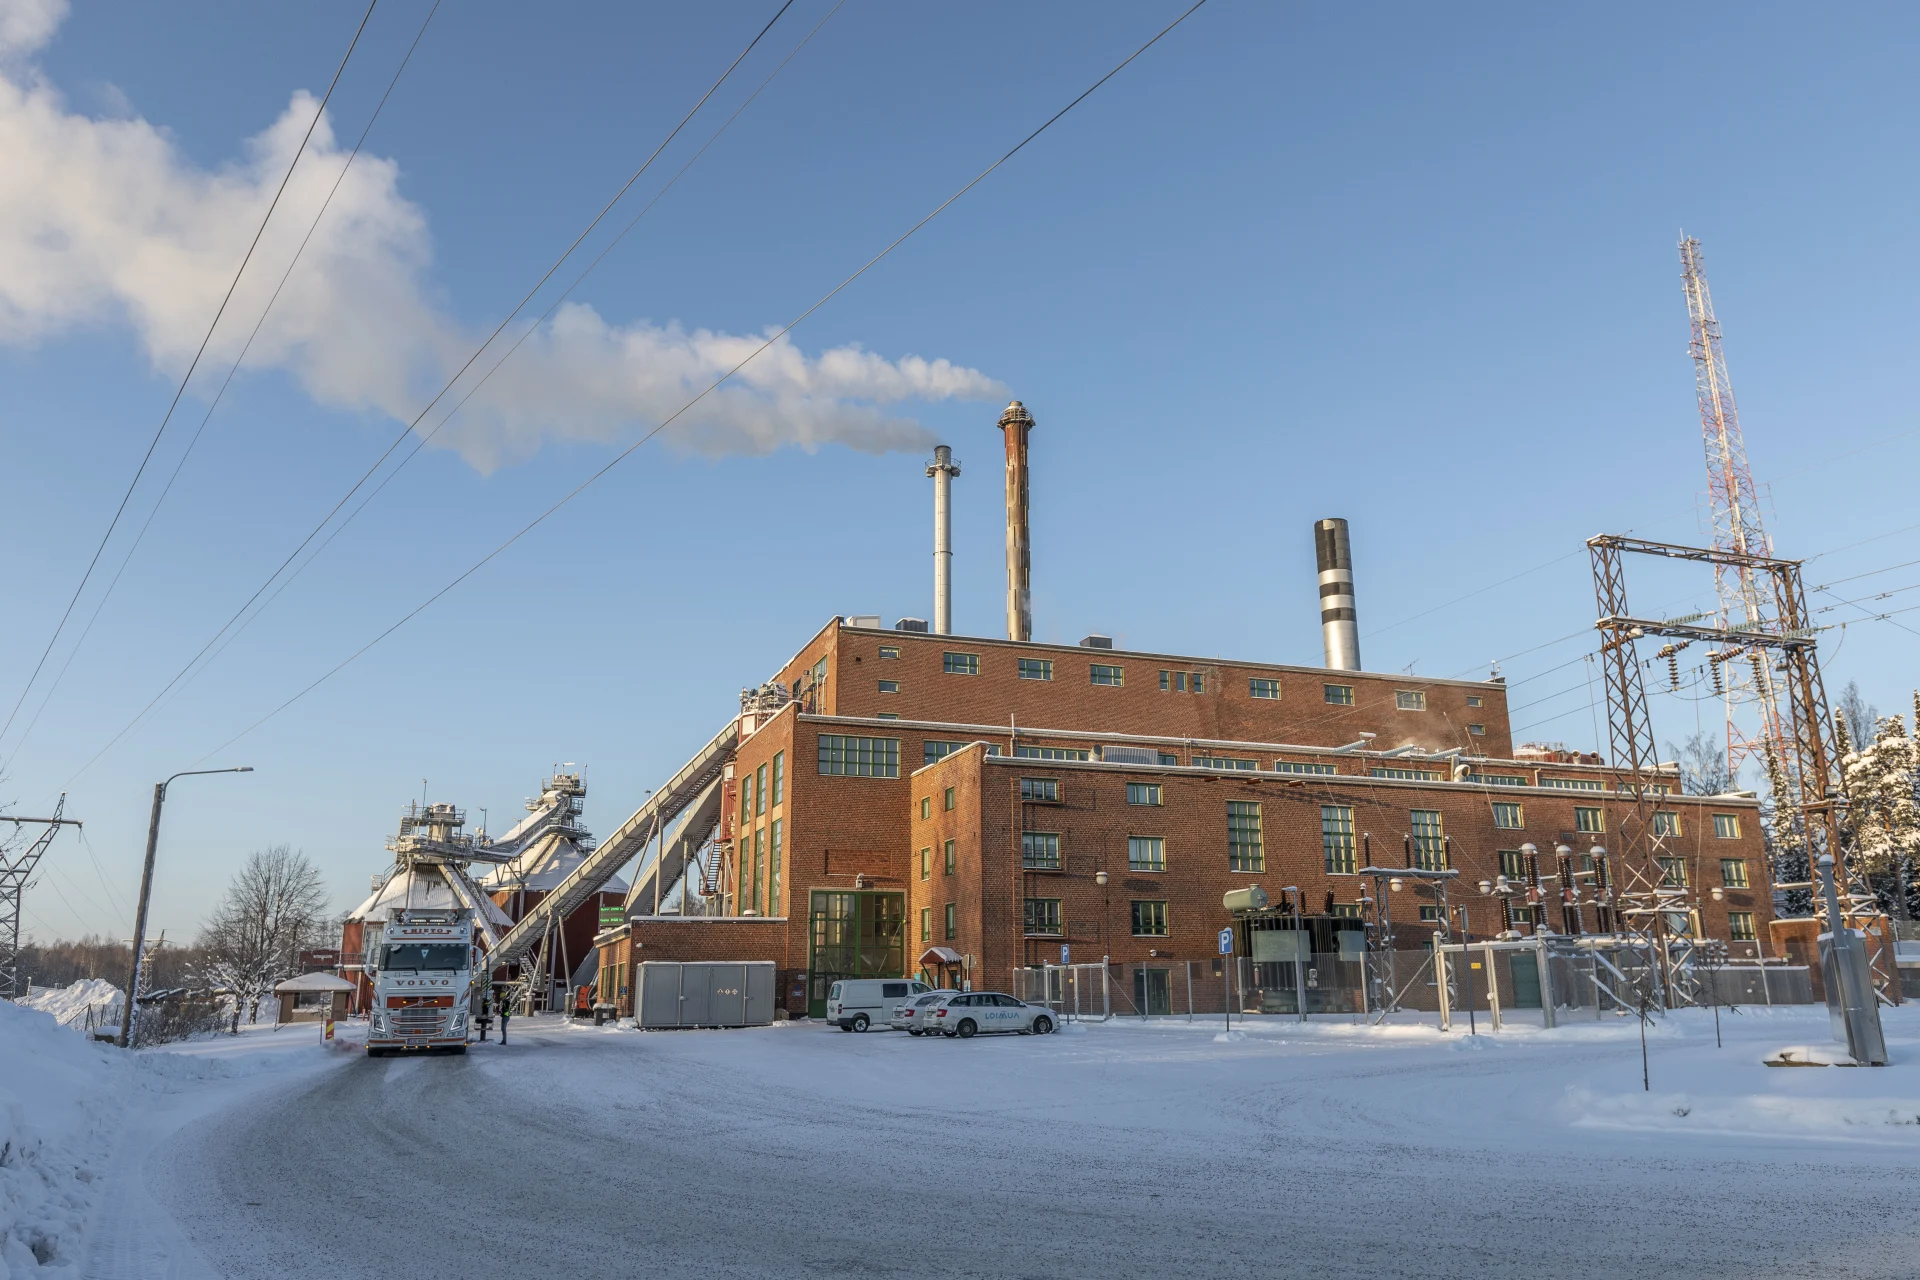 Loimua's Vanaja power plant located in Hämeenlinna, photographed from the outside in winter.